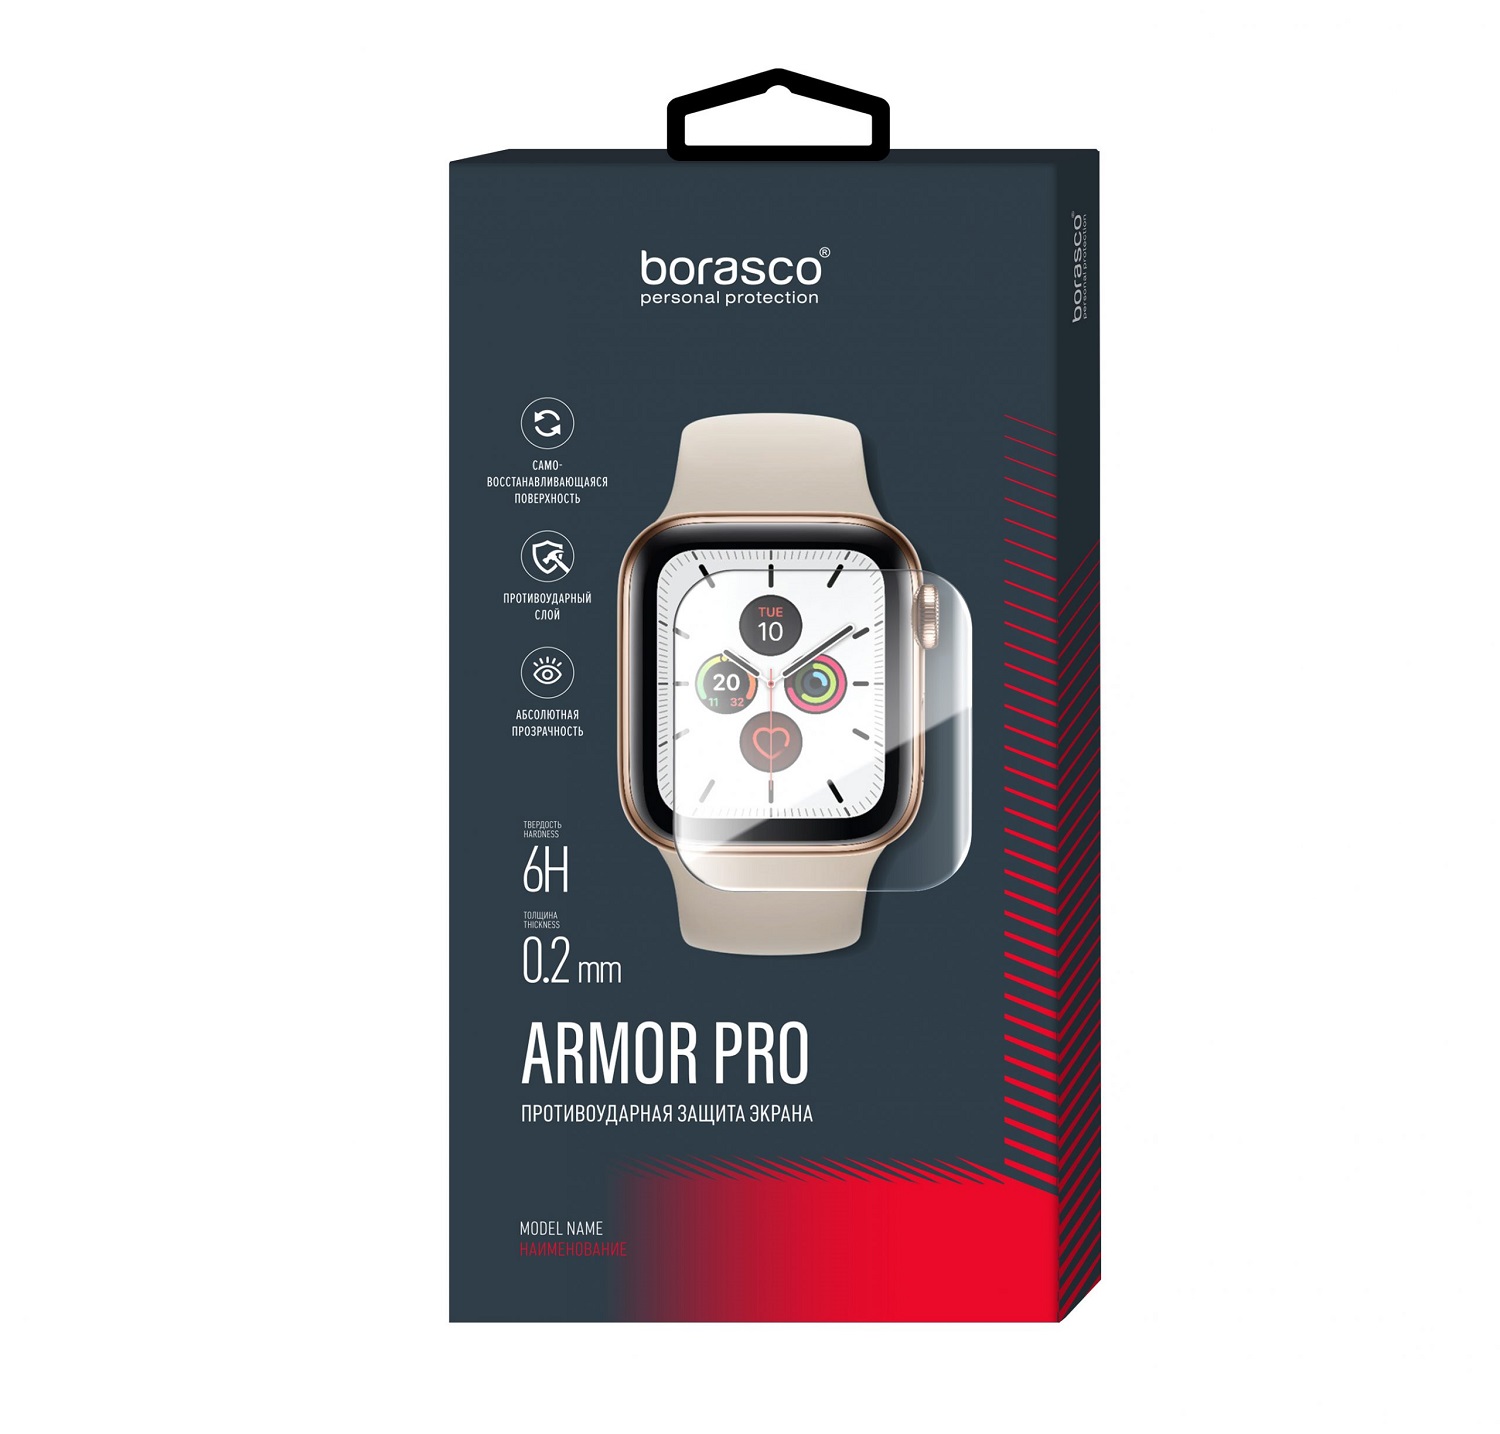 Защита экрана BoraSCO Armor Pro для Xiaomi Mi band 4/5